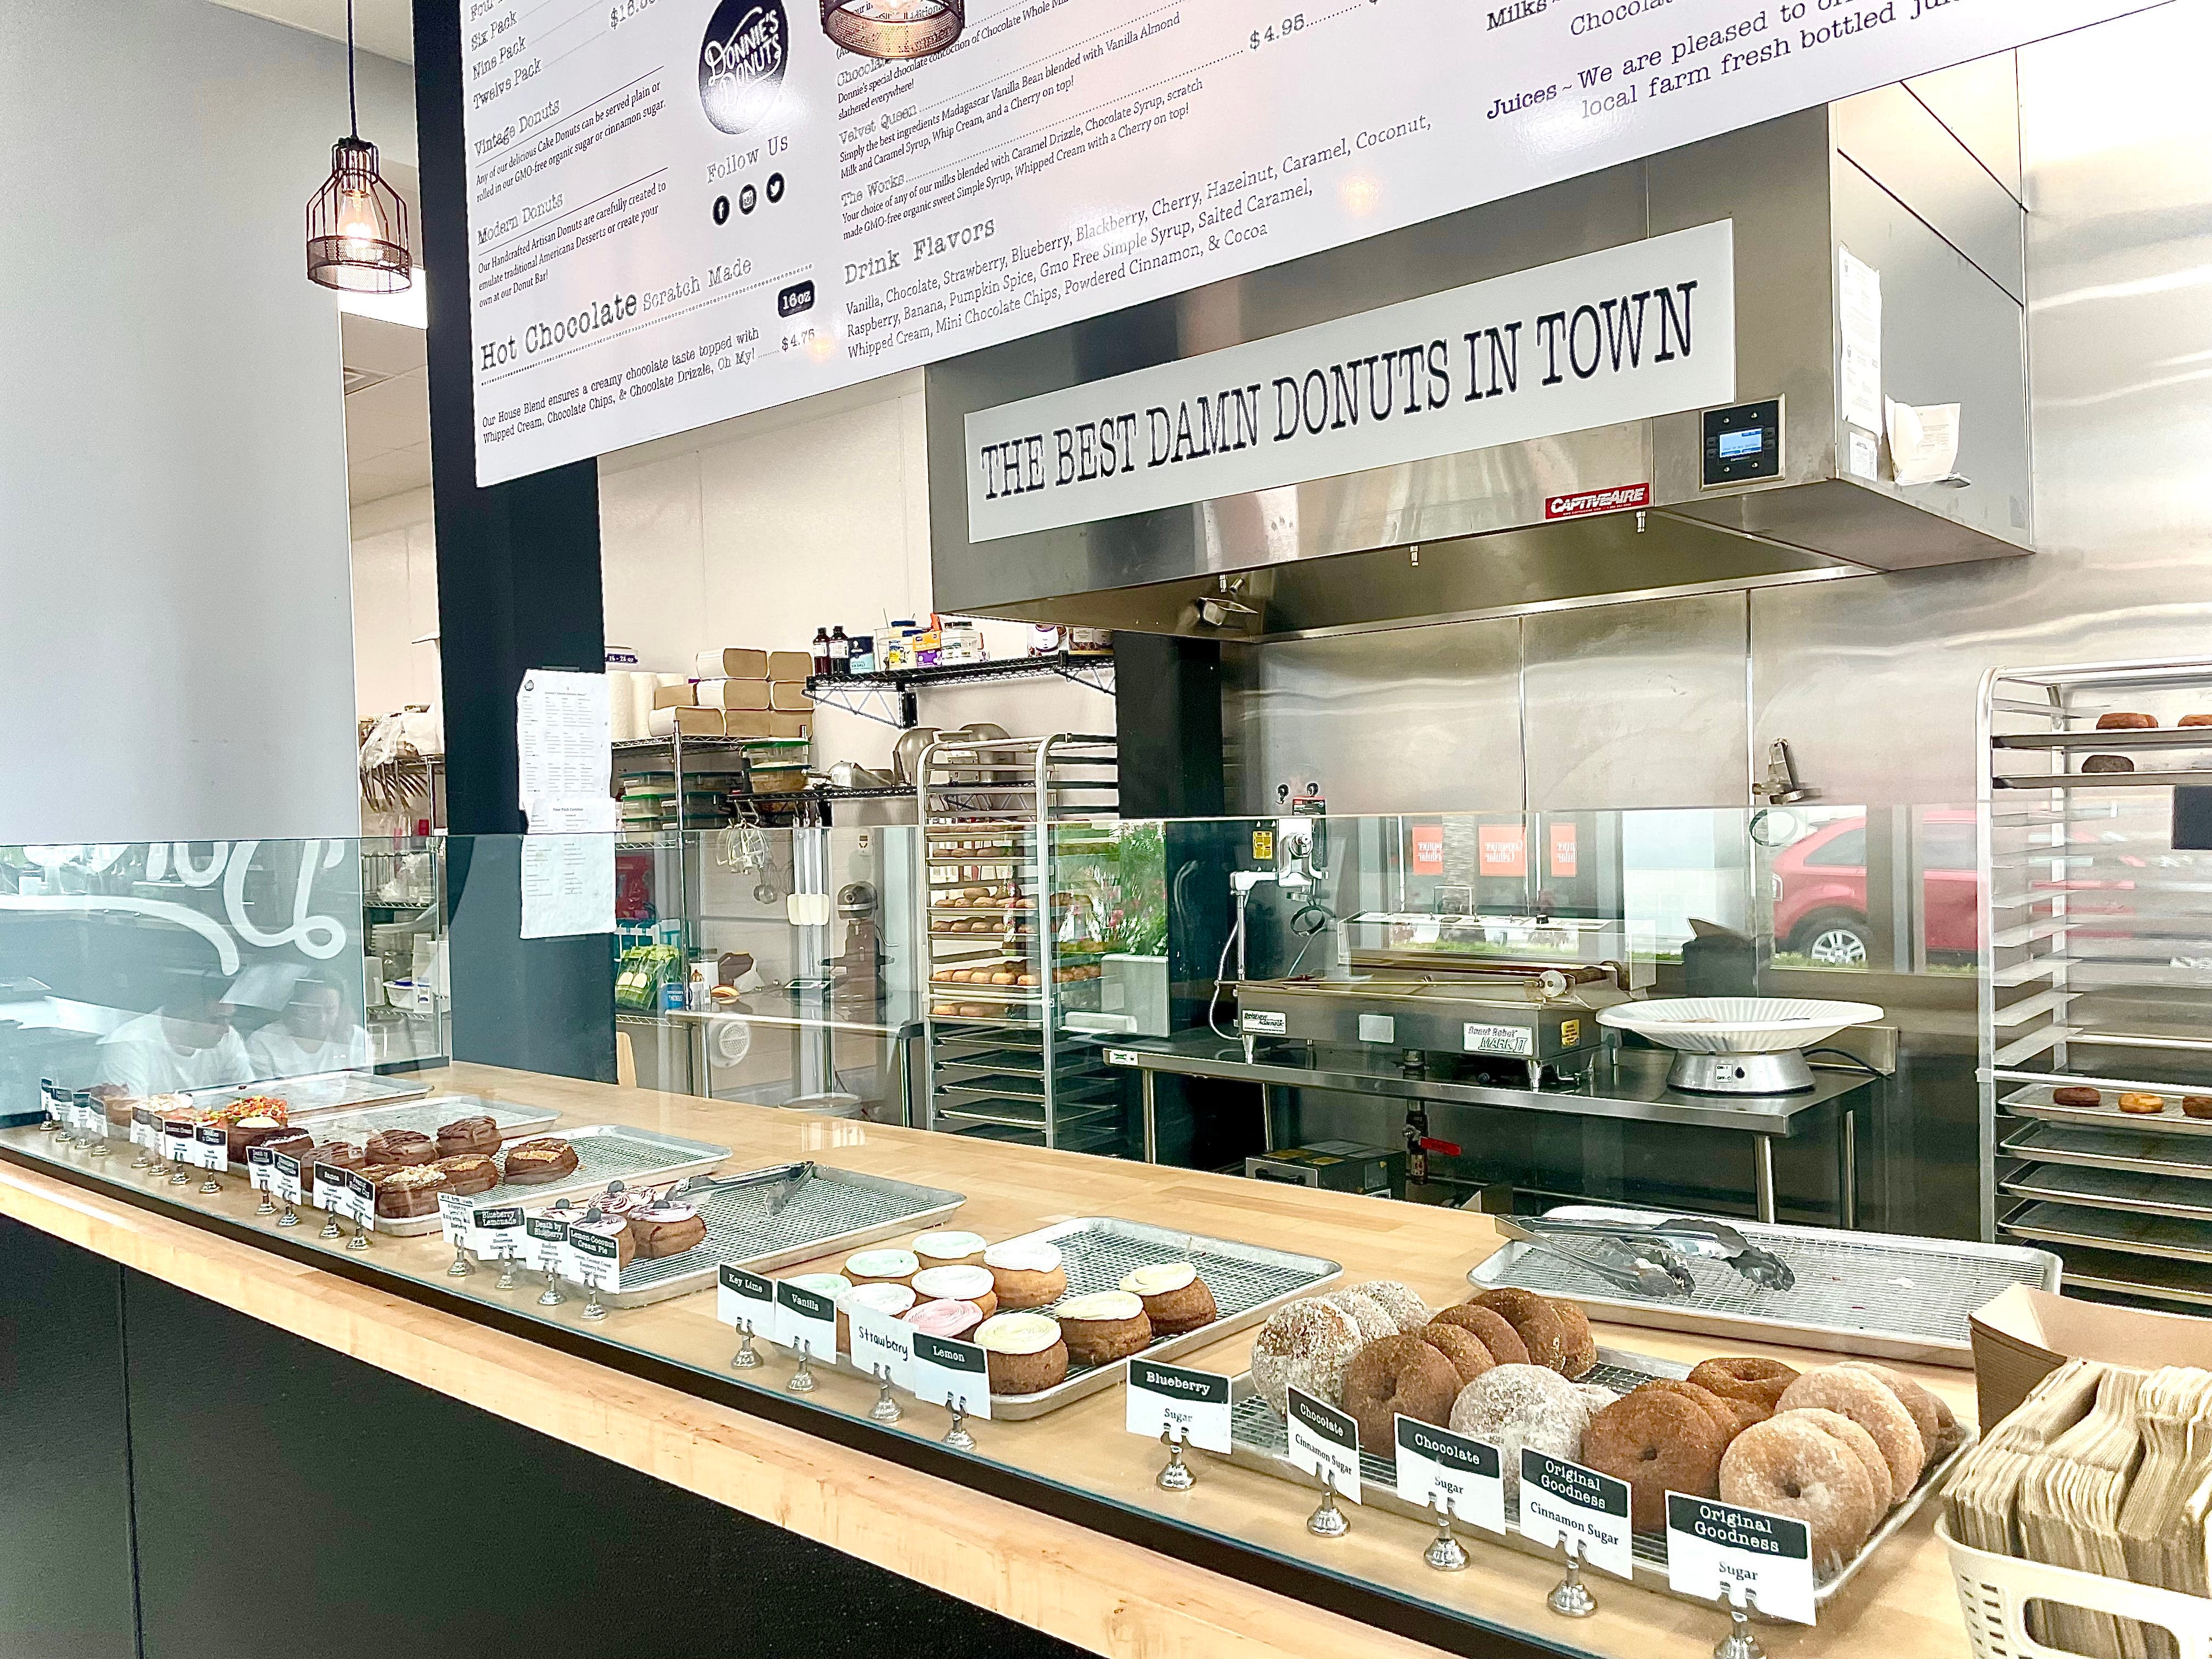 Daytona-area doughnut shop named best in Florida, according to Yelp